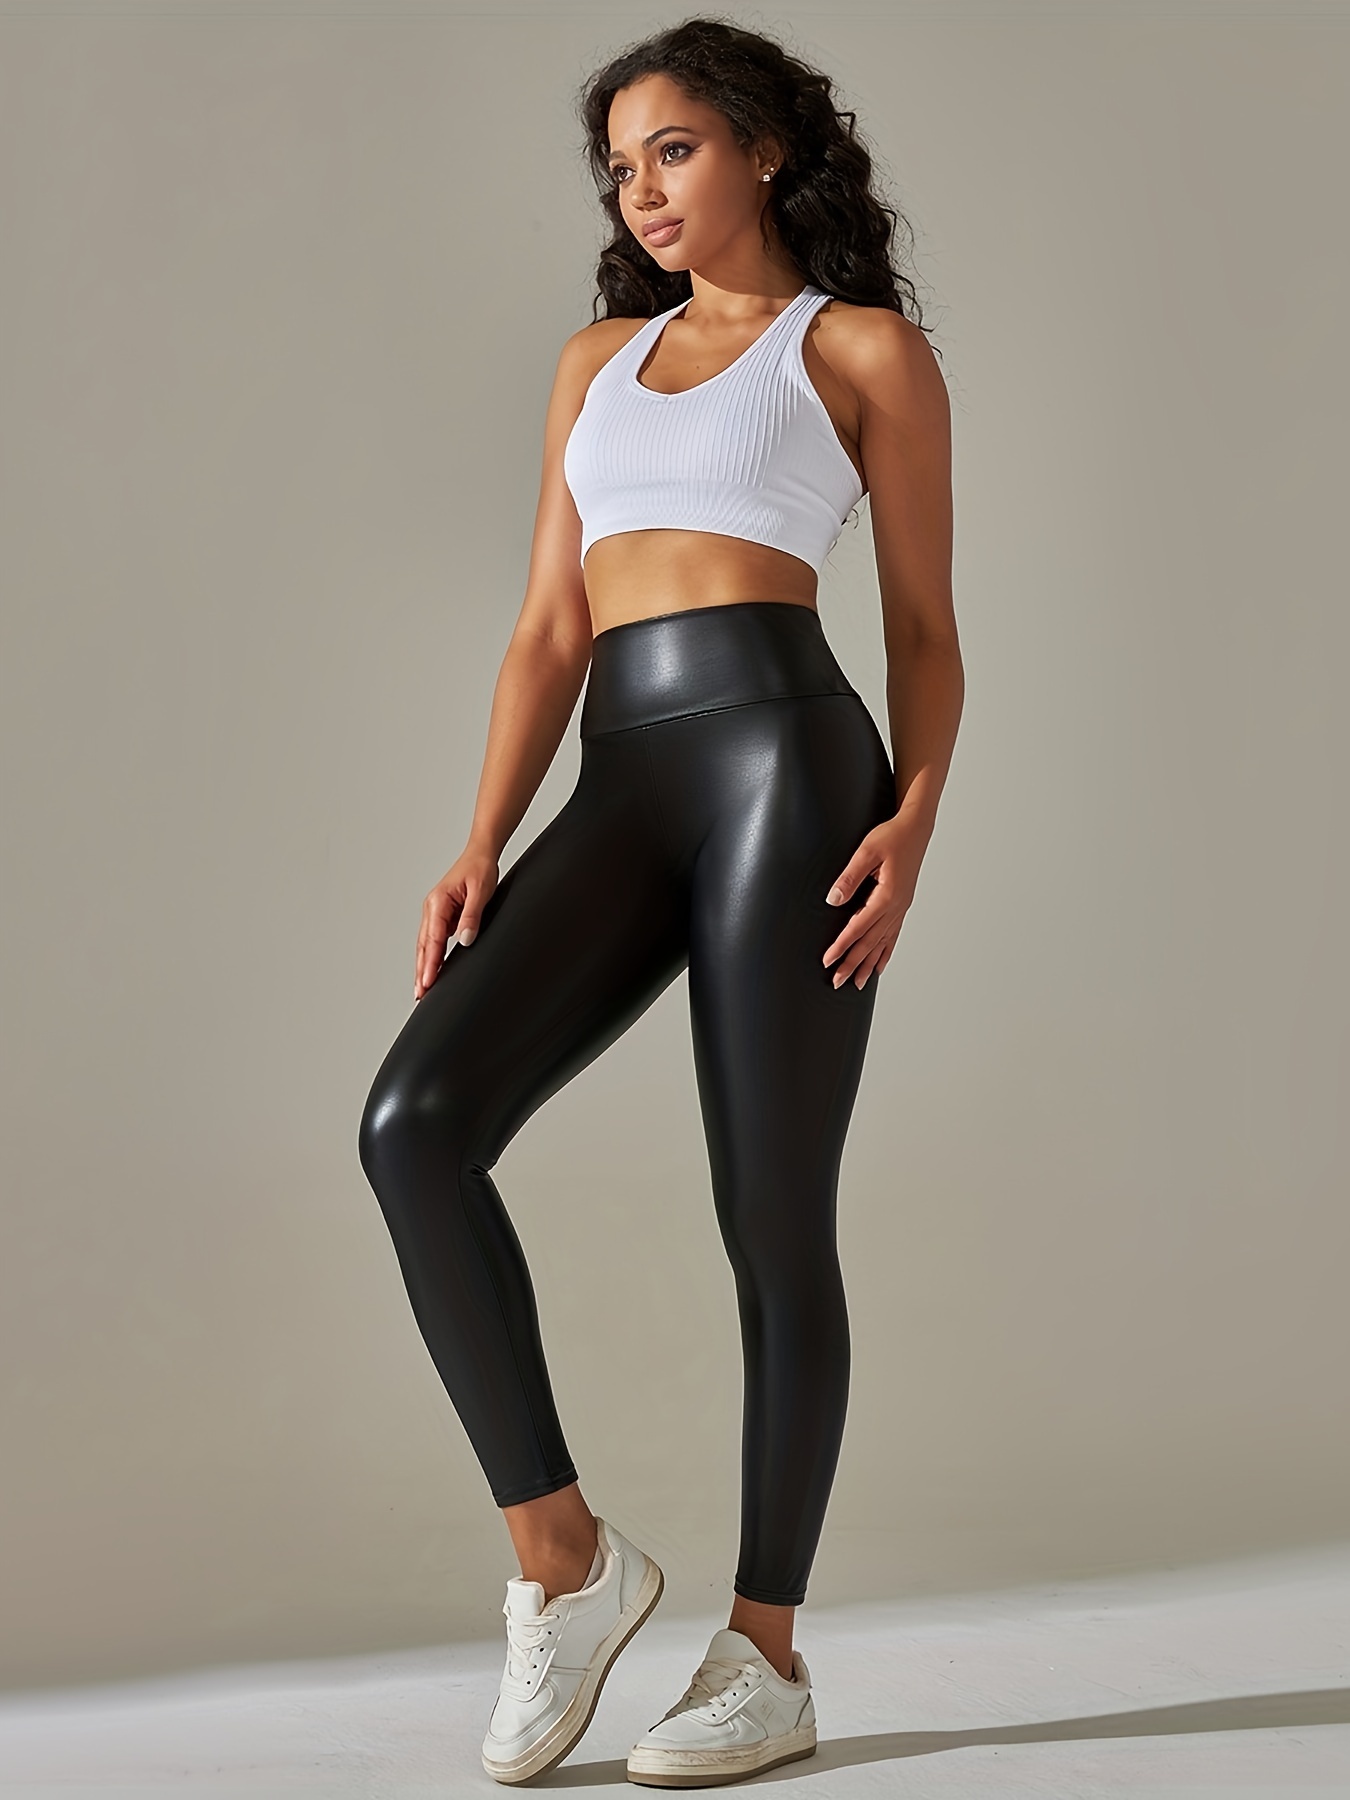 Fashion Women Slim High Waist Stretch Shiny Faux Leather Pants Black  Leggings Sport Yoga Pants